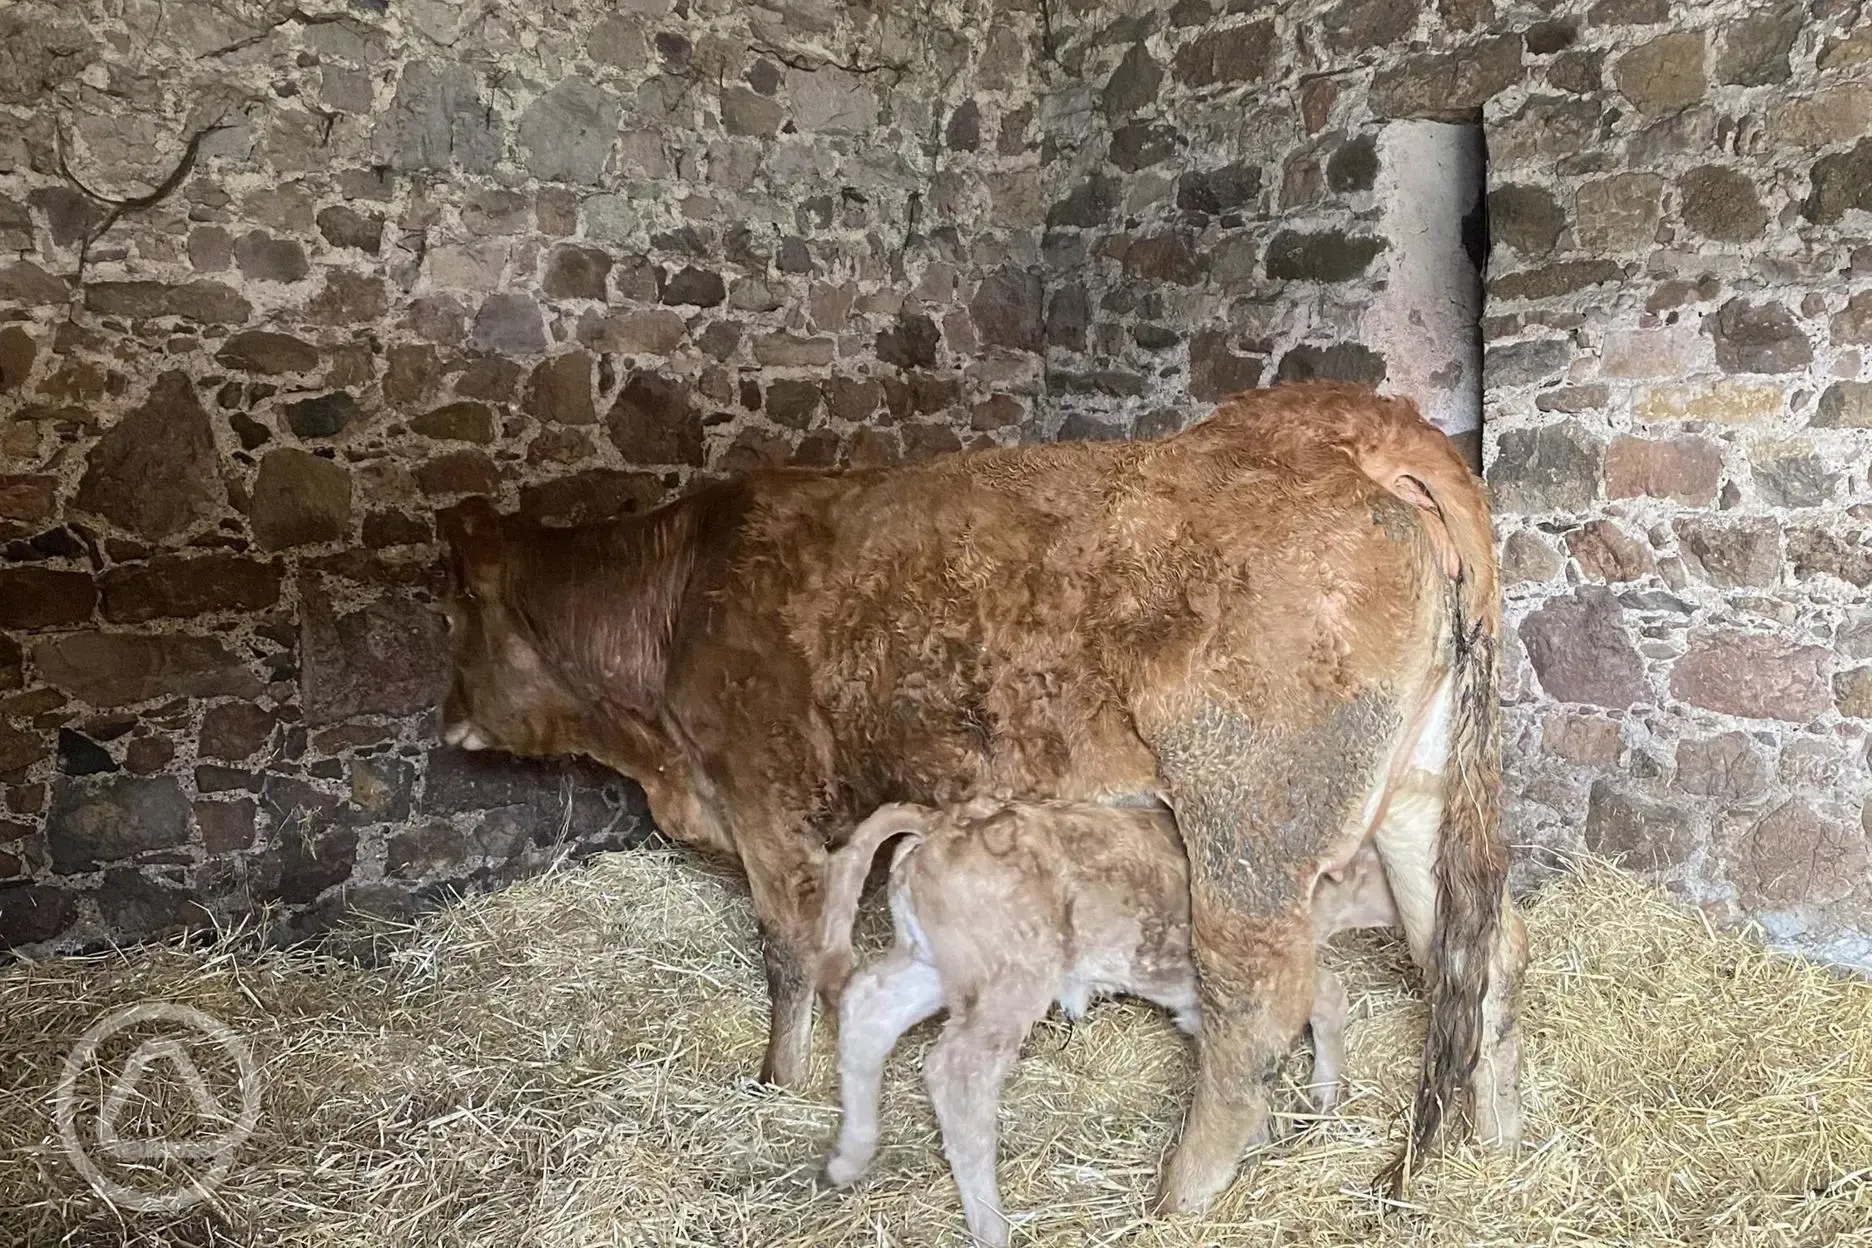 Newborn calf hiding from mum